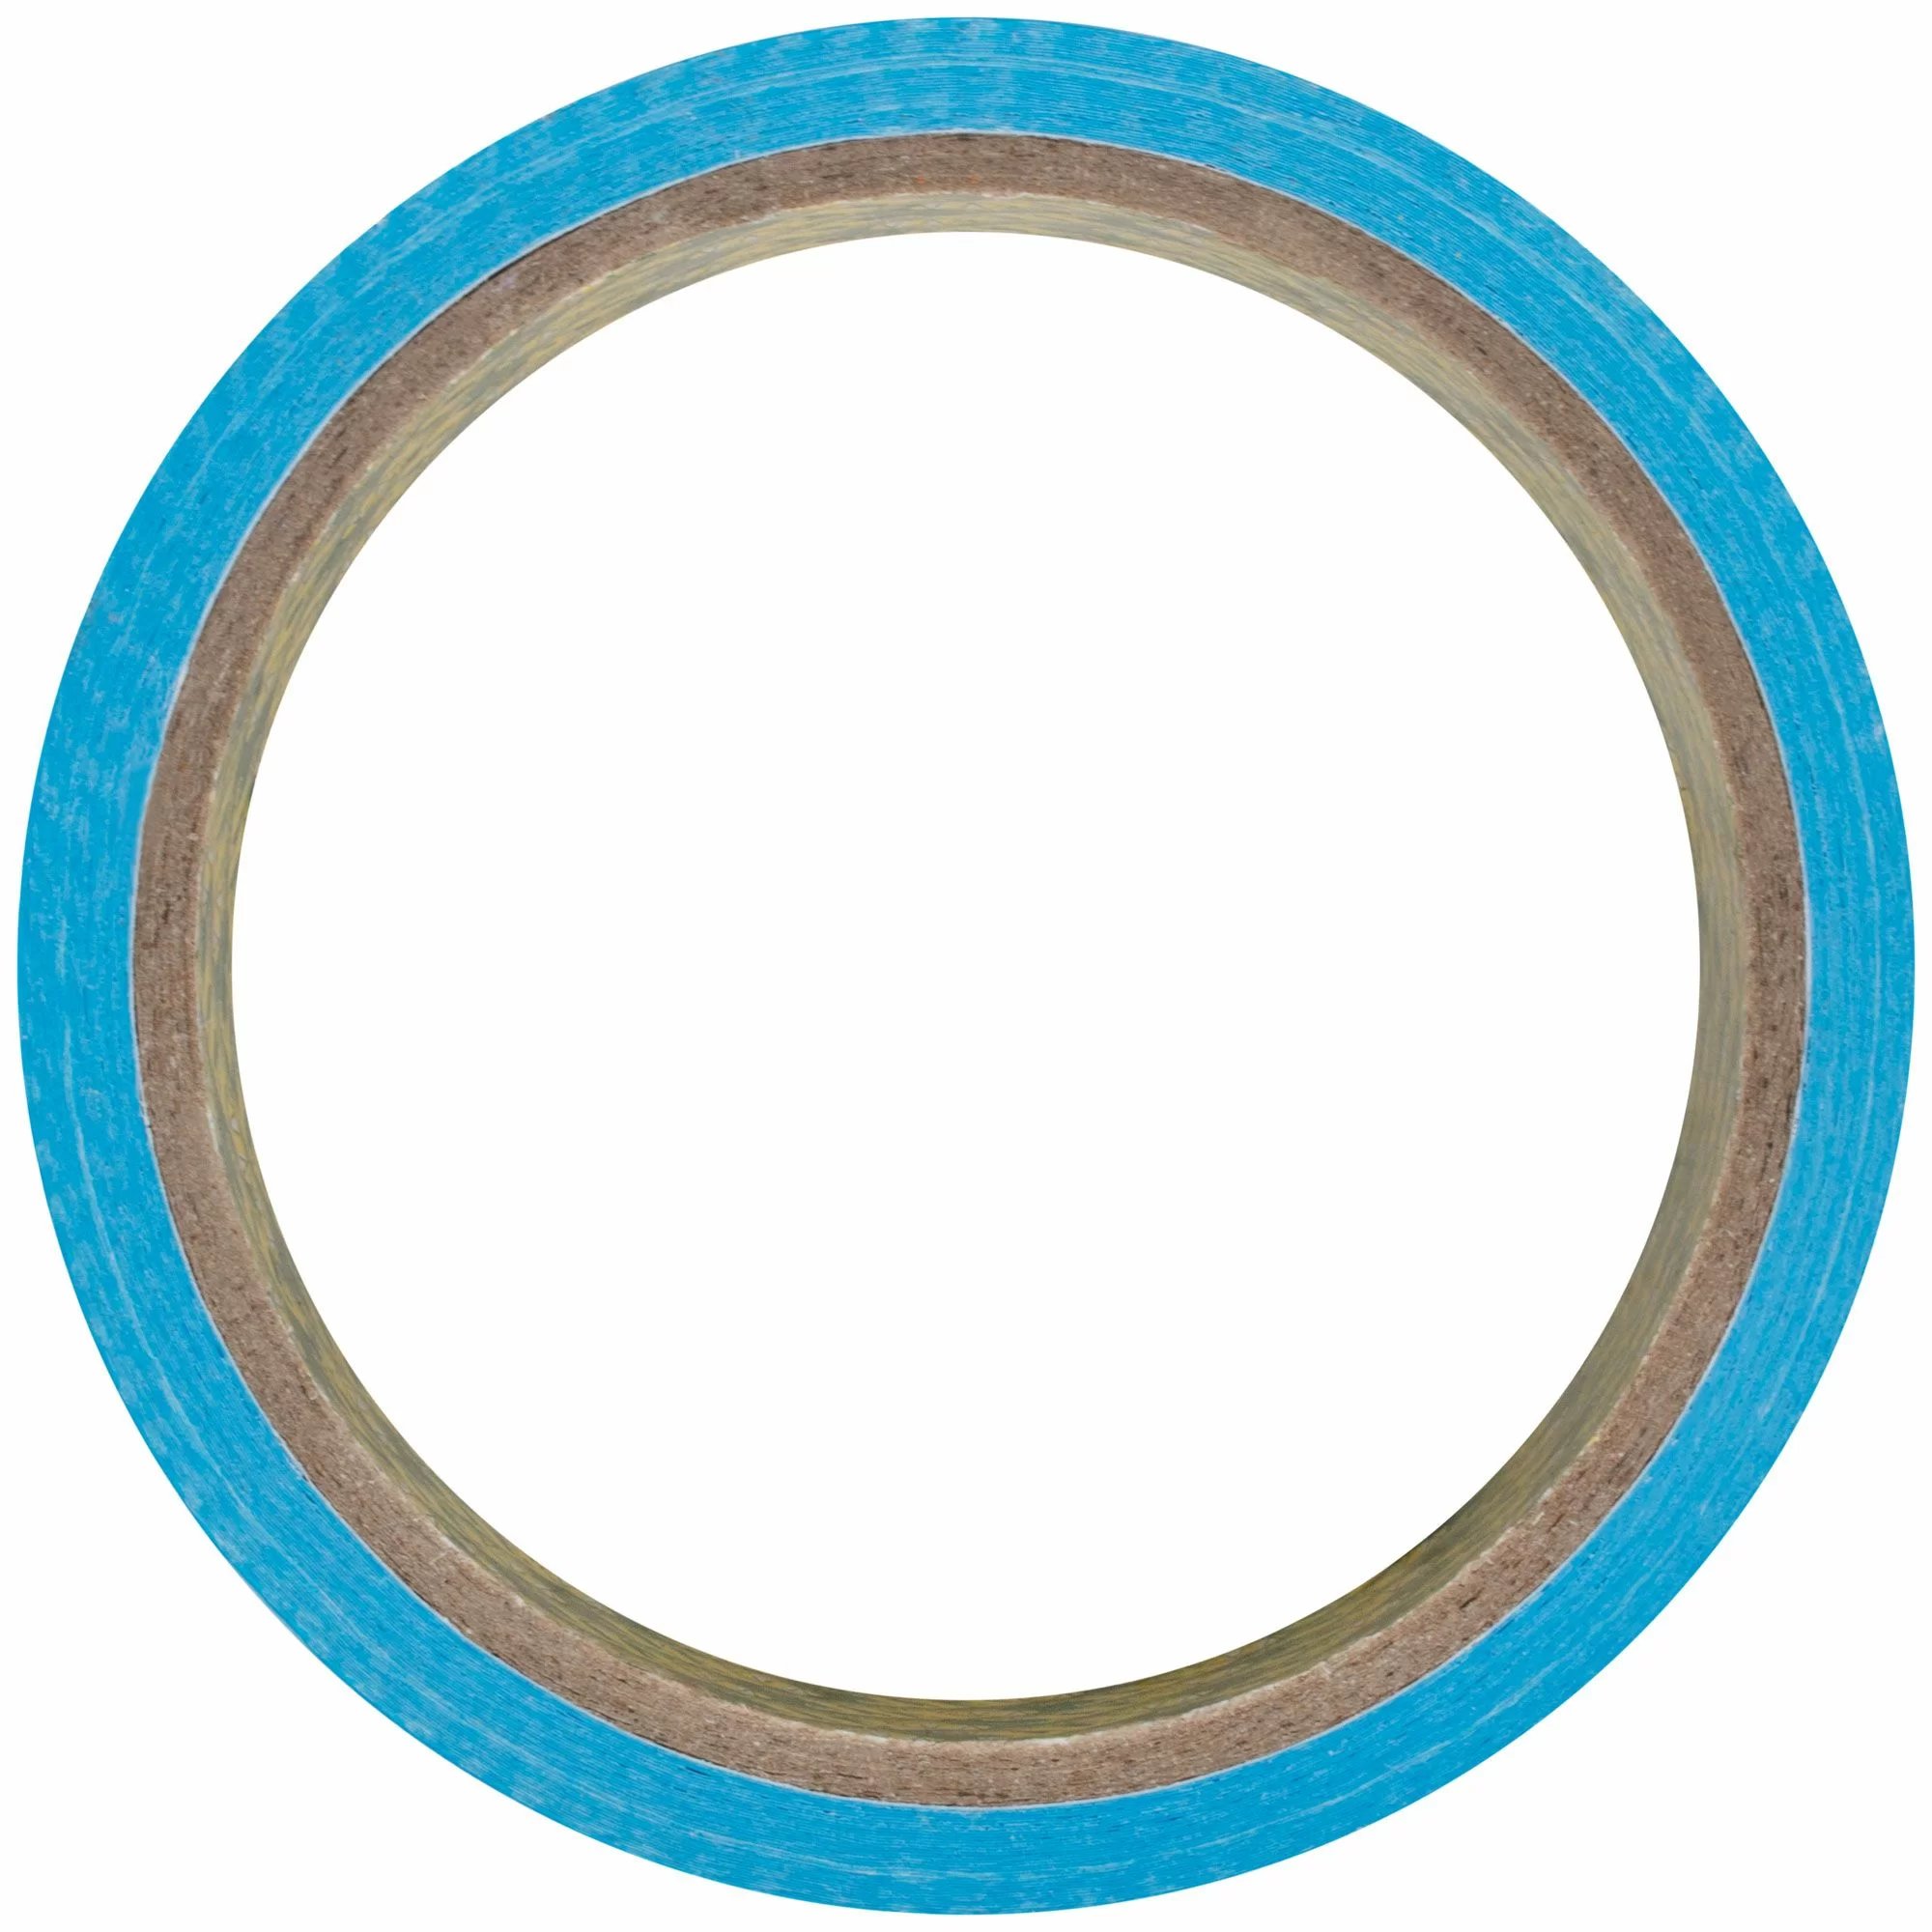 Армированная лента Fit ductape 48ммх10м синяя